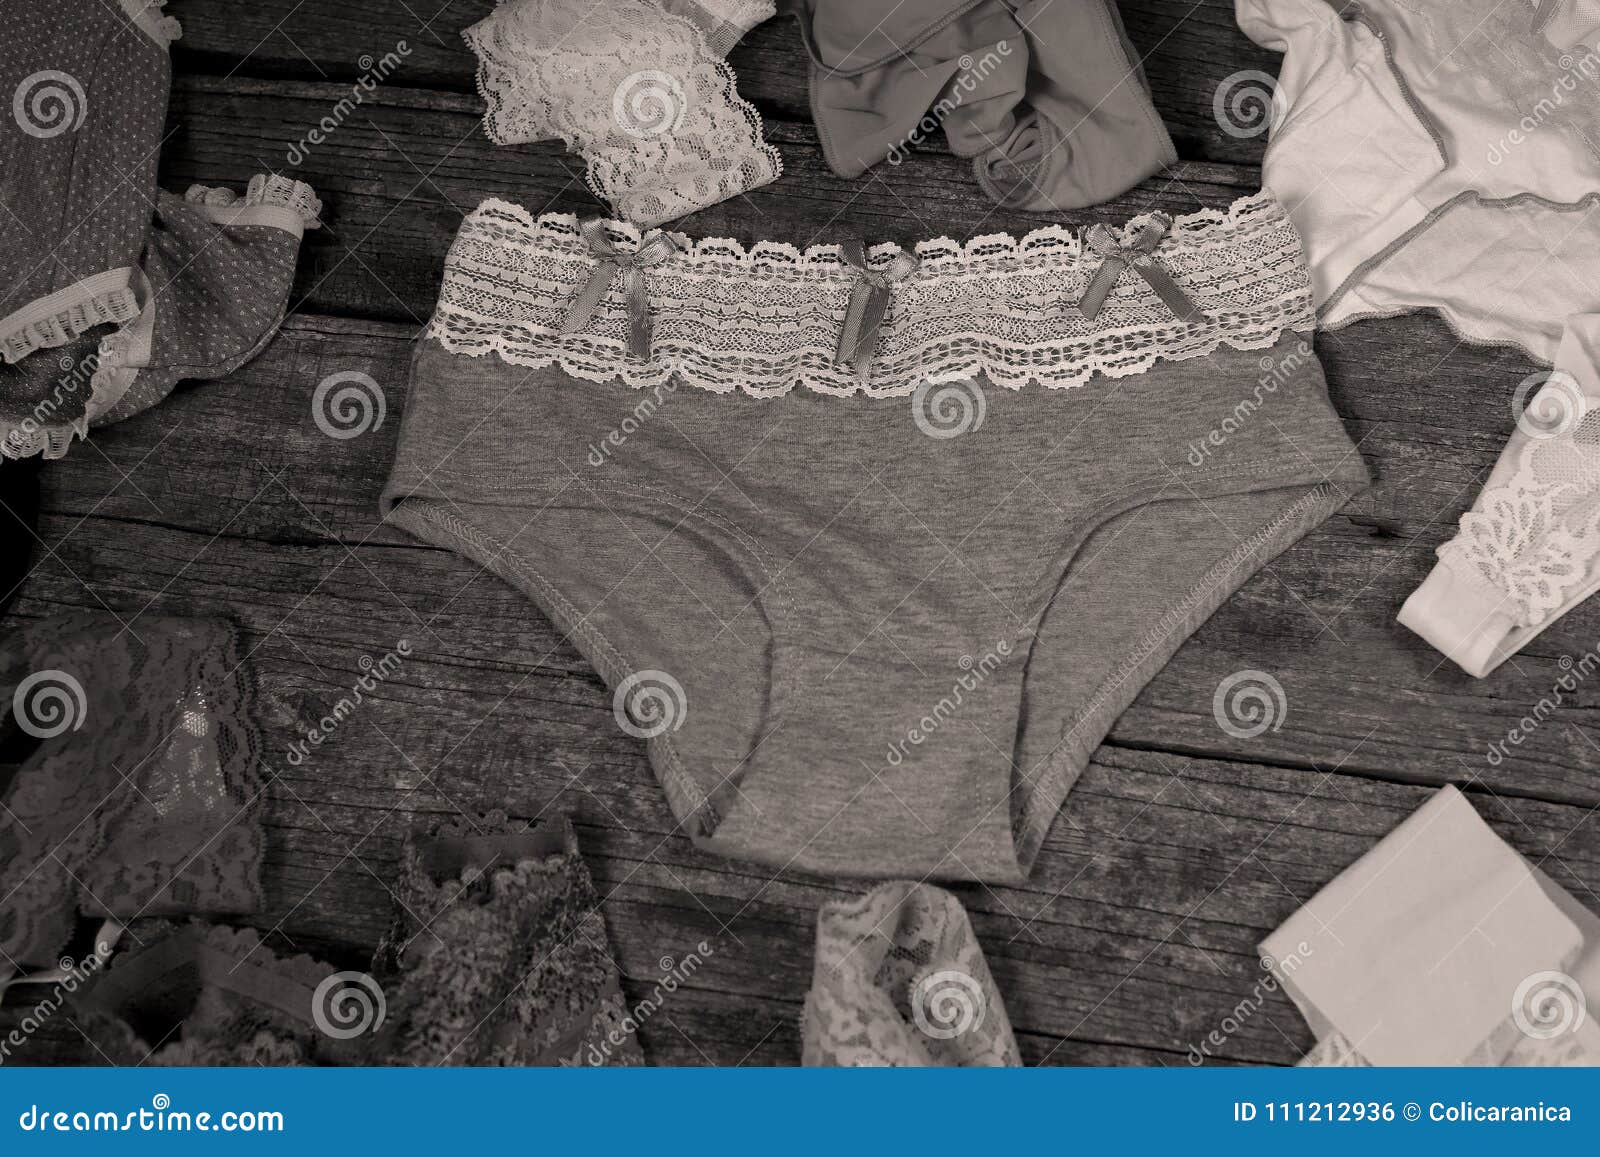 4,350 Waist Panties Stock Photos - Free & Royalty-Free Stock Photos from  Dreamstime